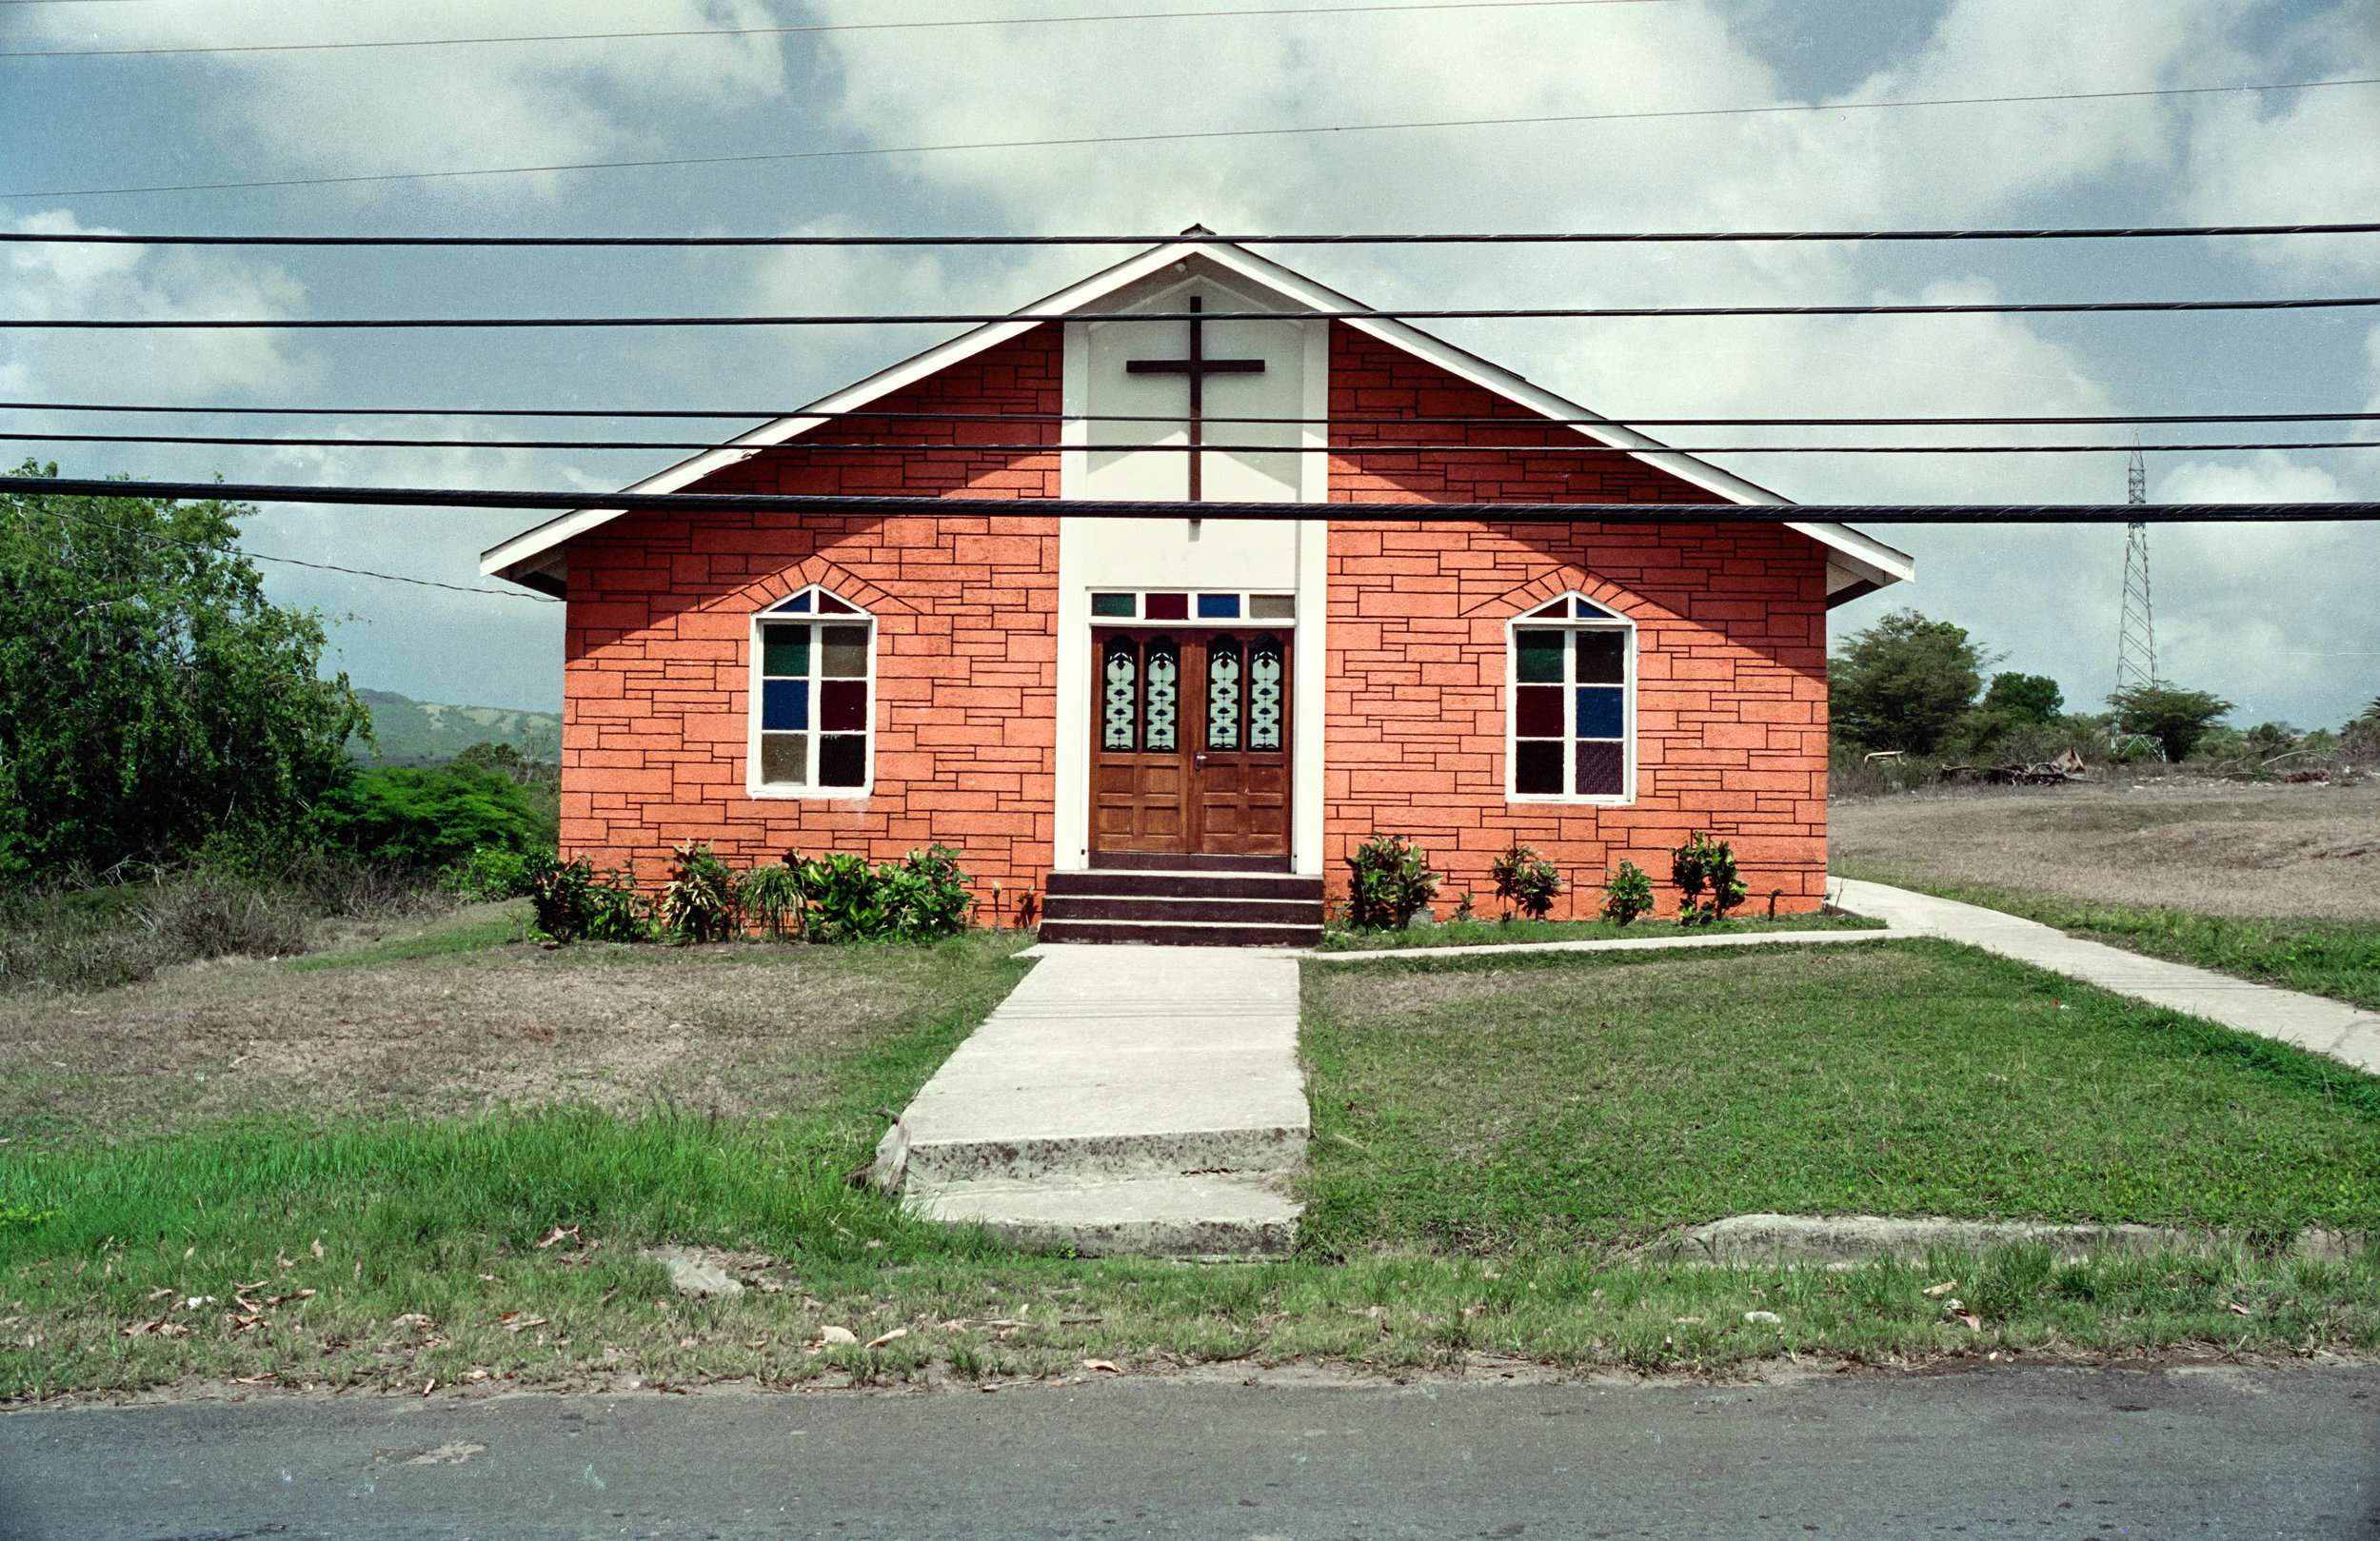   Antigua, 1979  